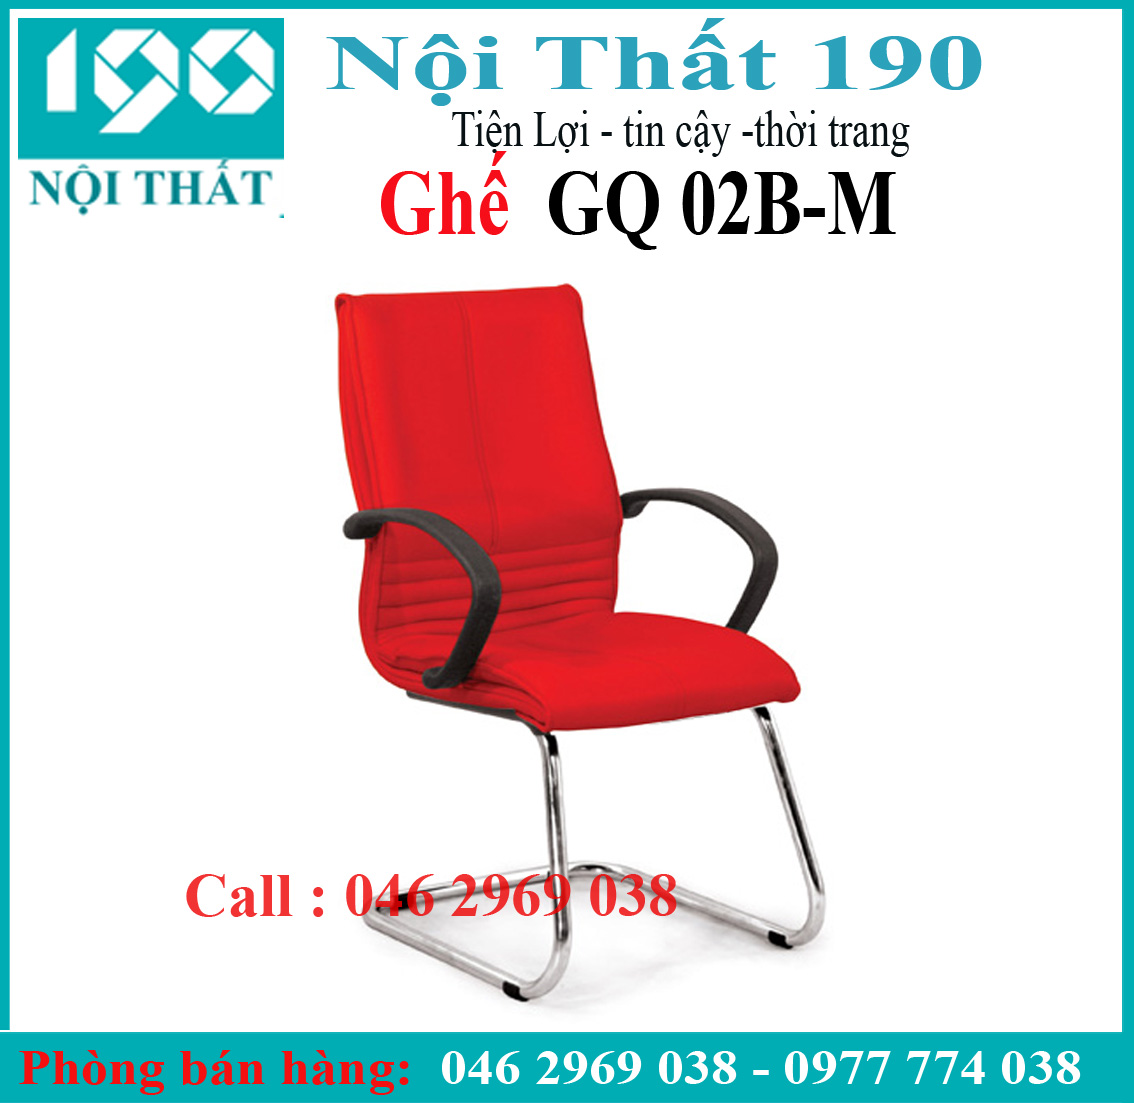 Ghế chân quỳ GQ02B-M